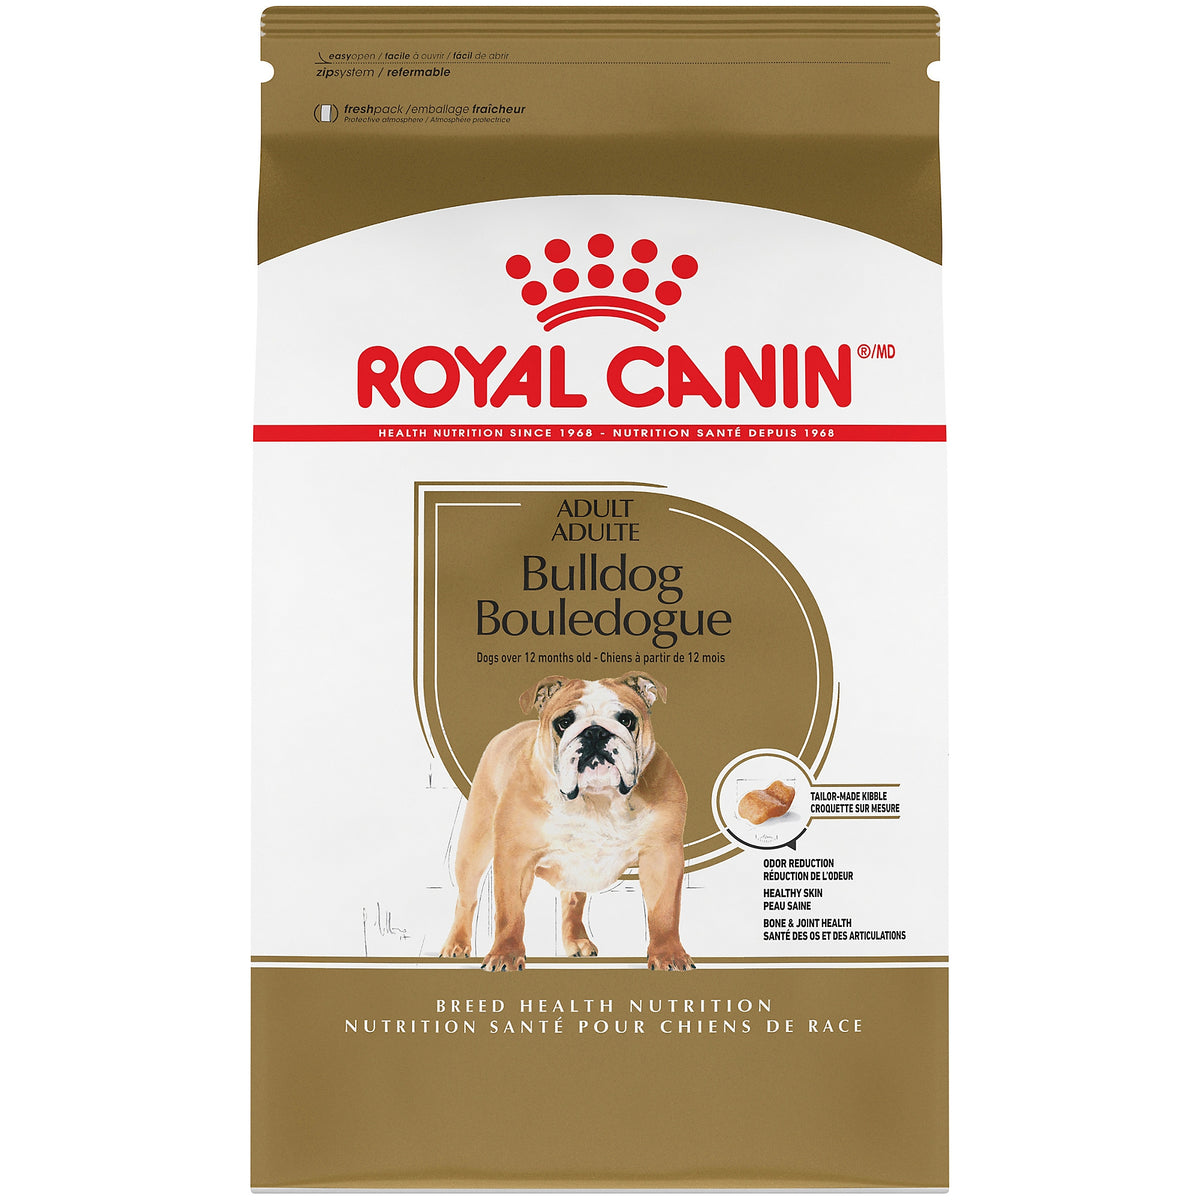 Royal Canin Adult Bulldog Food